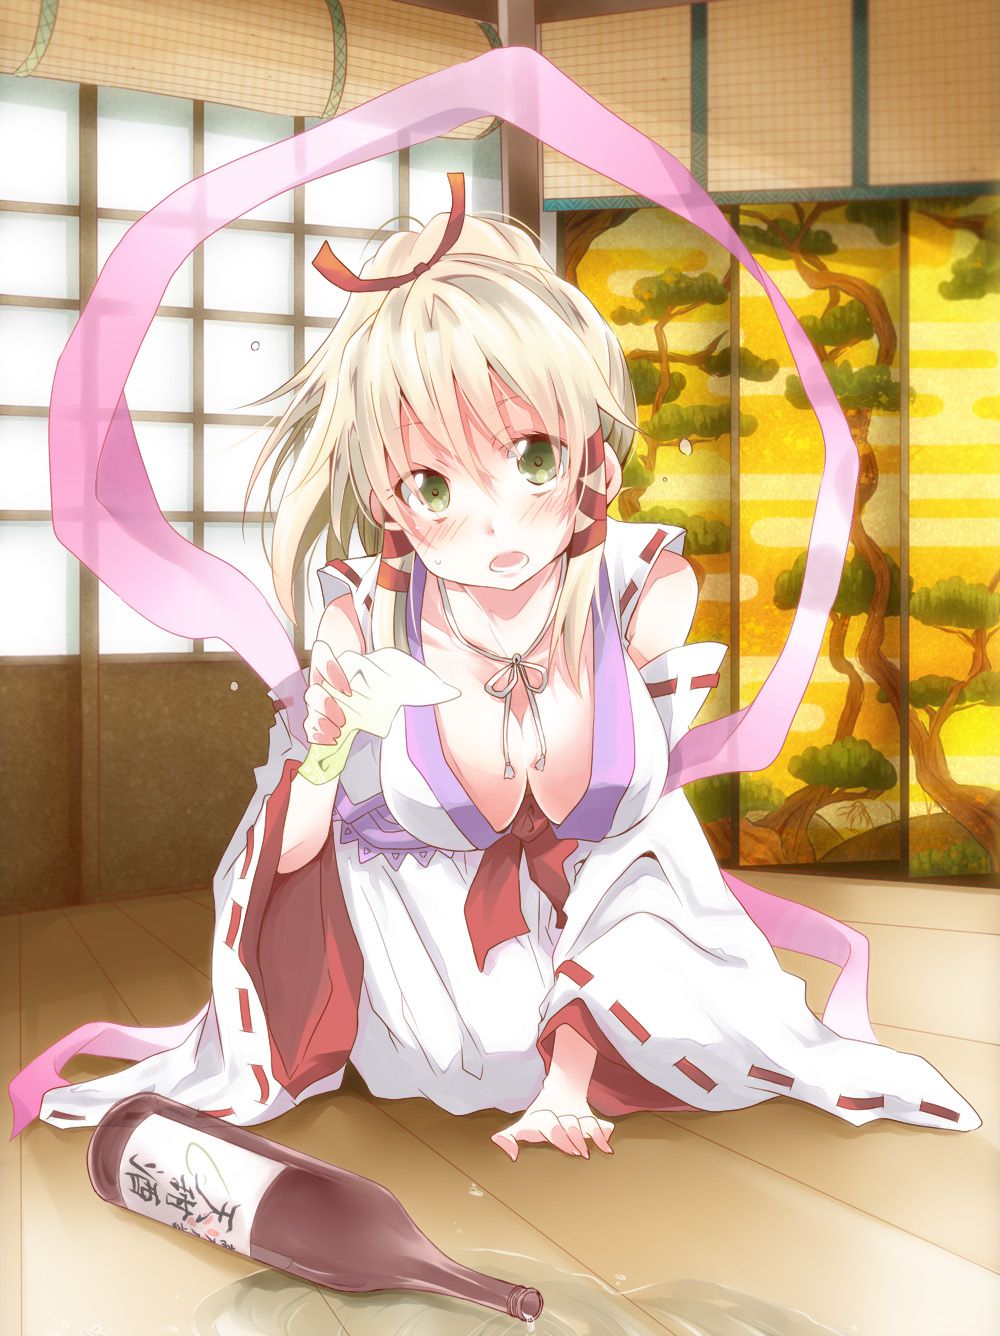 [Secondary/ZIP] Second erotic image of a girl dressed like kimono 11 12